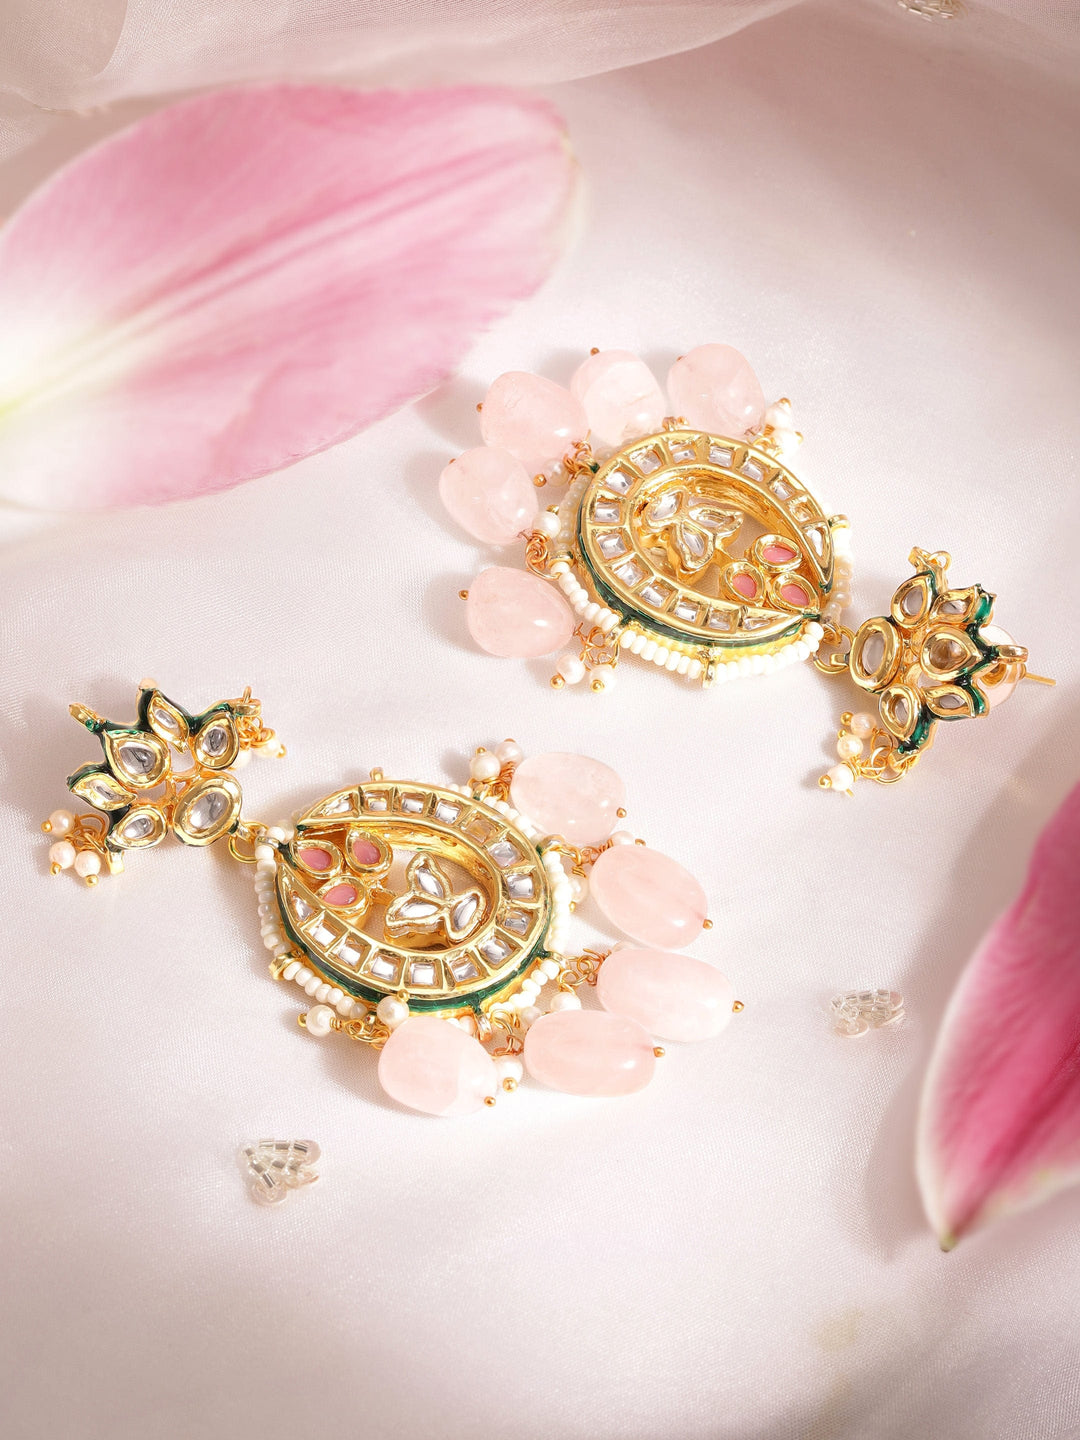 22K Gold plated Kundan crystal with pastel pink beaded and pearls Regal chandbali Earrings Earrings